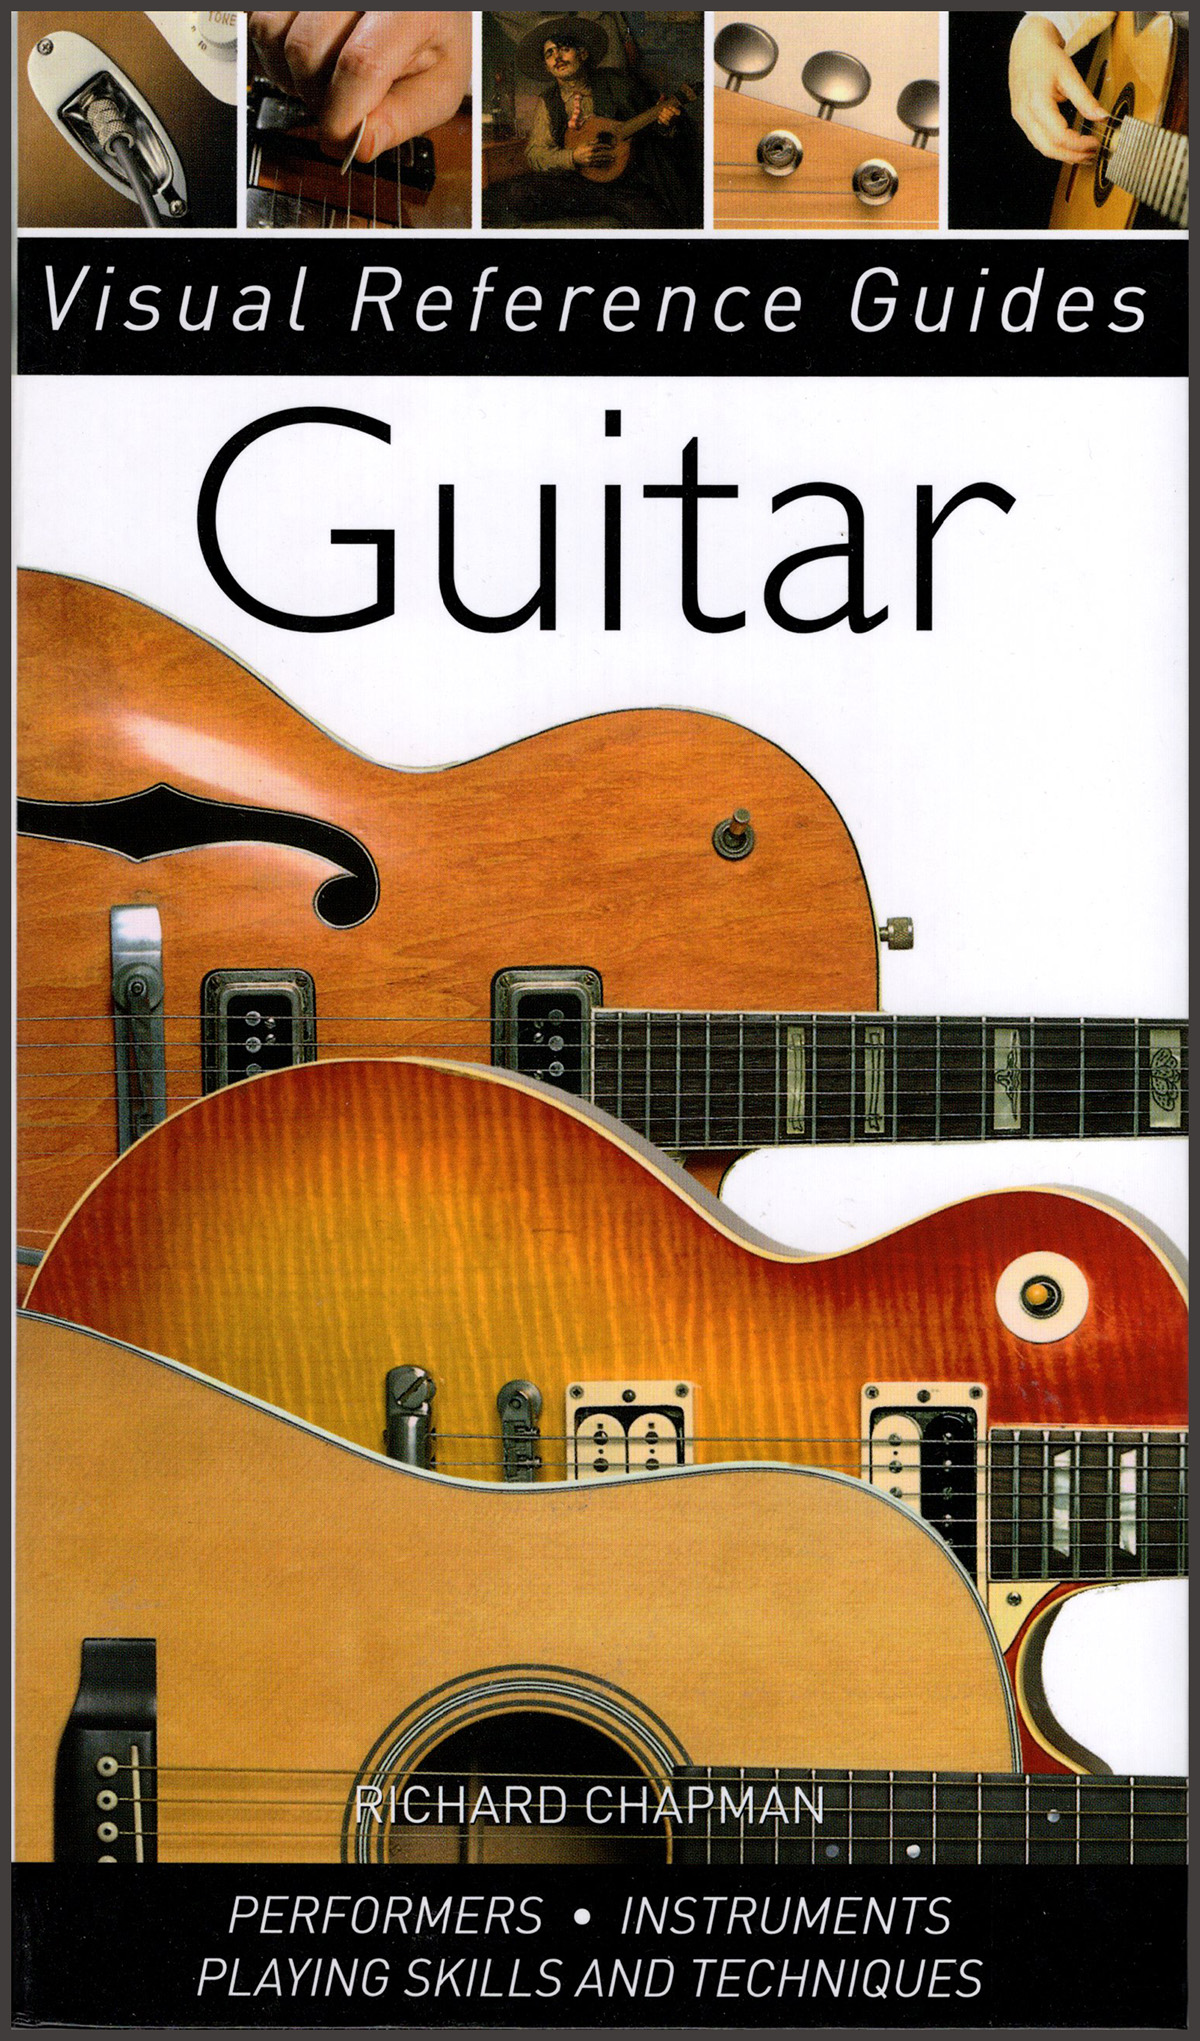 Chapman, Richard - Guitar (Visual Reference Guides Series)